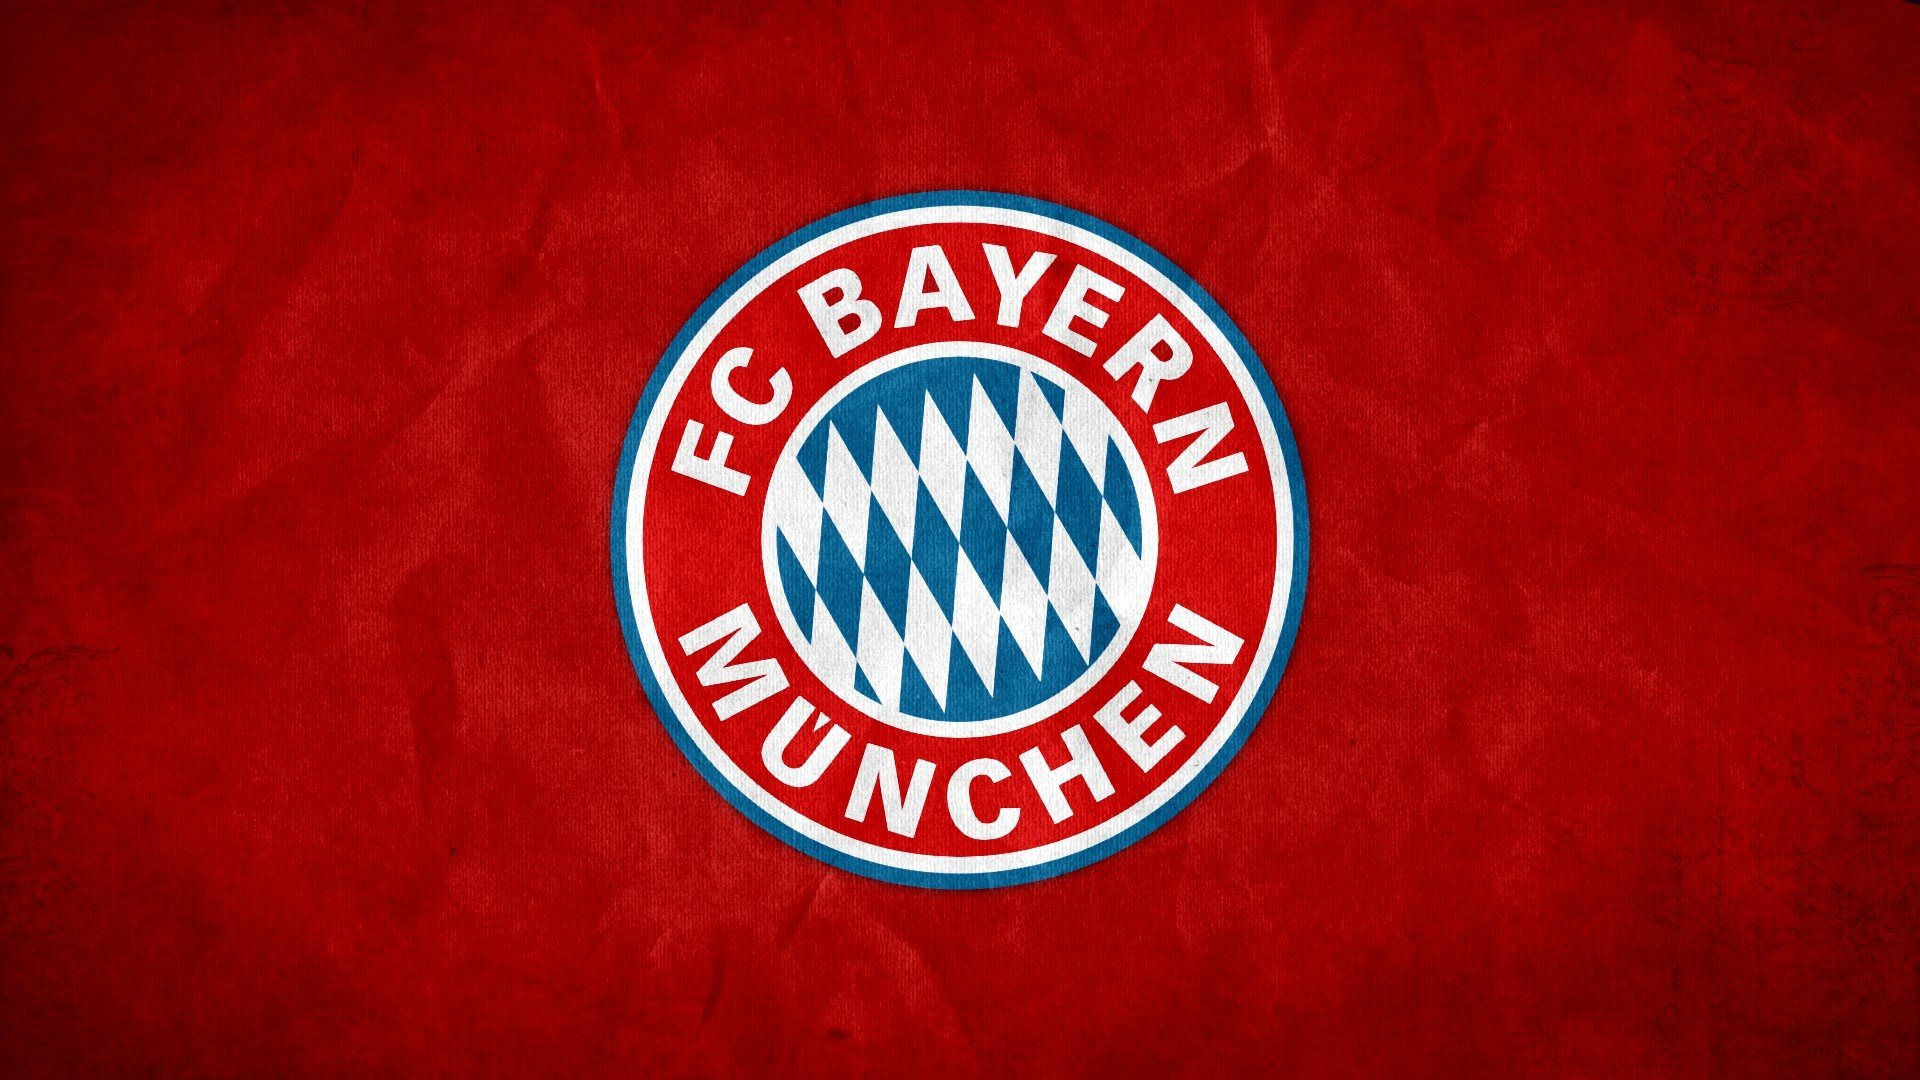 Niko Kovac ne quittera pas le Bayern Munich